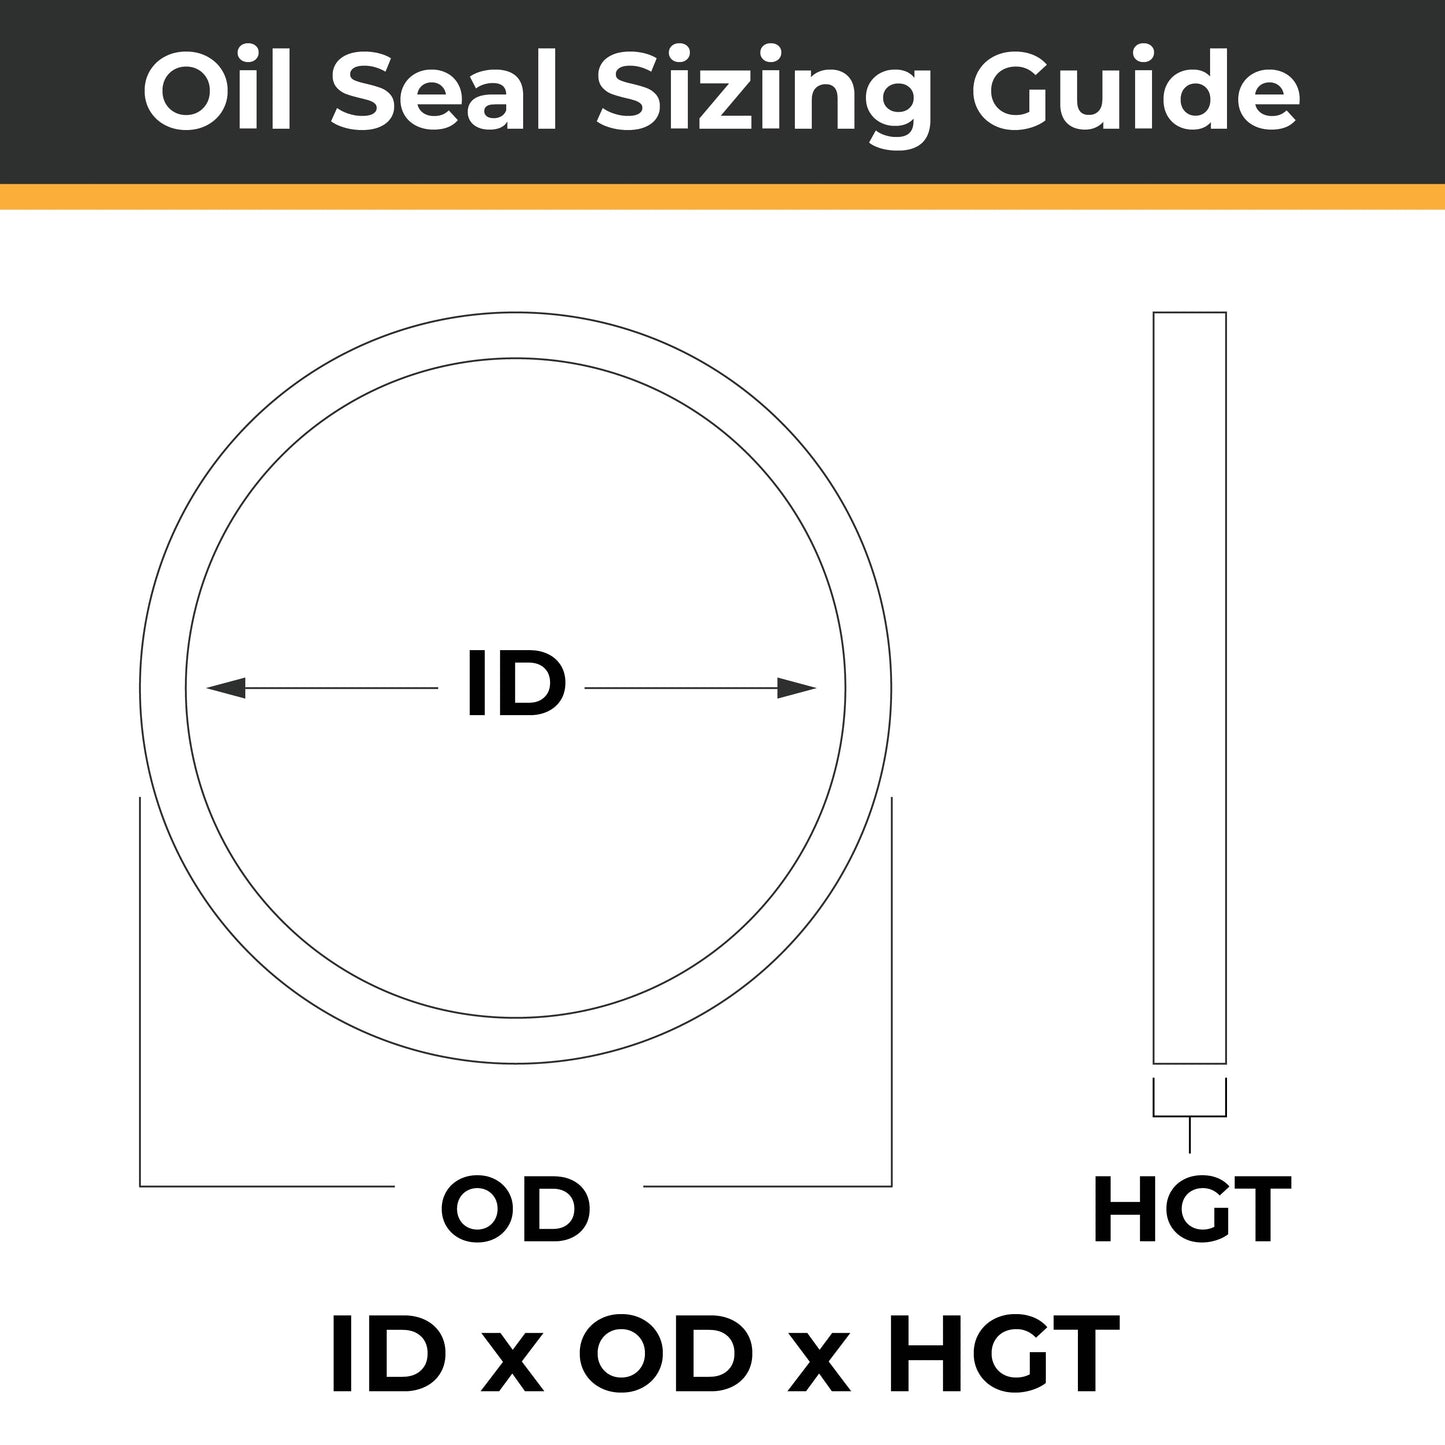 16mm x 28mm x 7mm - R23 (TC) Oil Seal - Totally Seals®